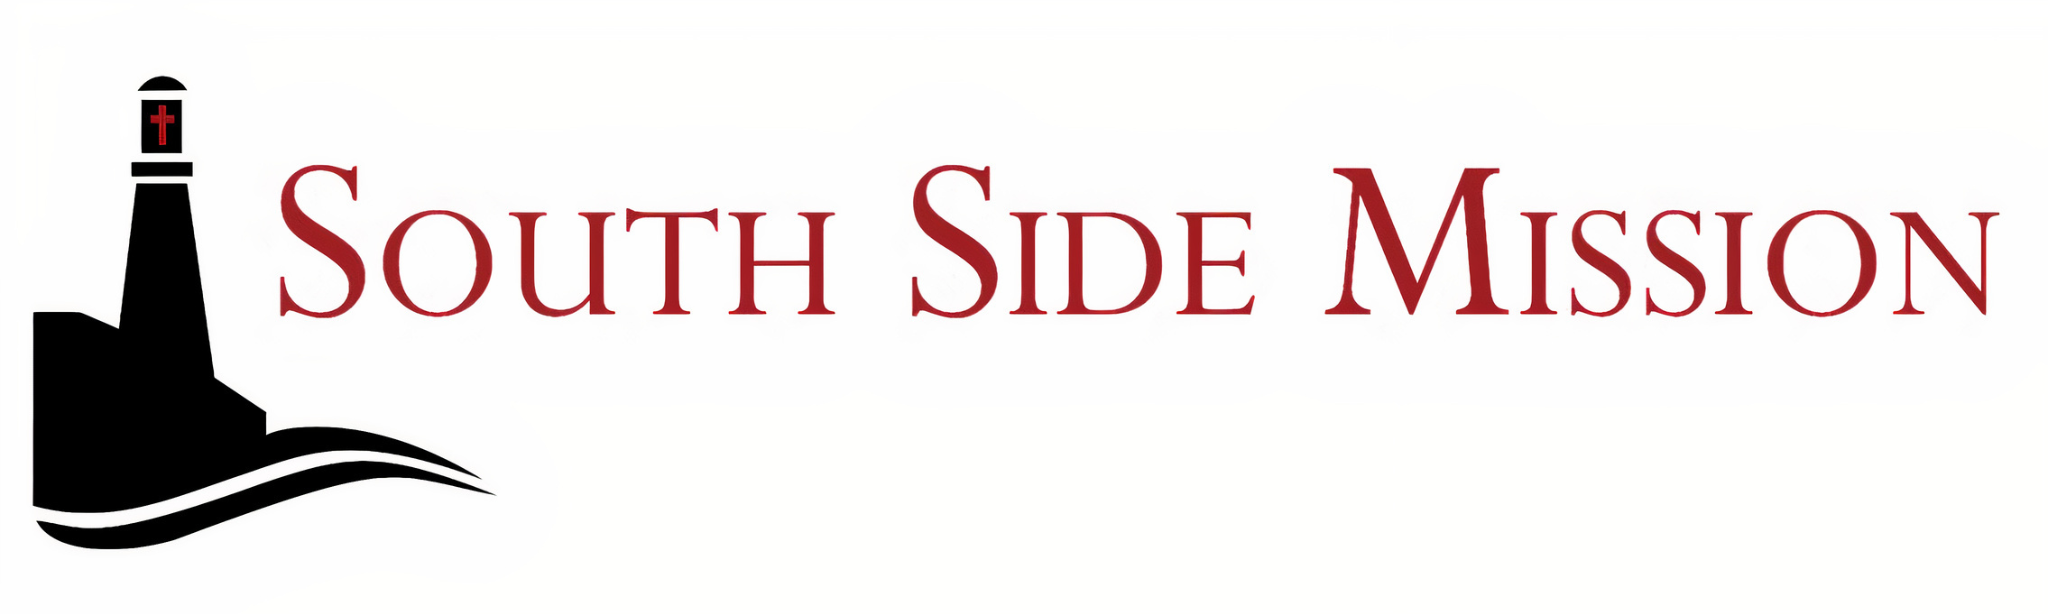 South Side Mission Logo